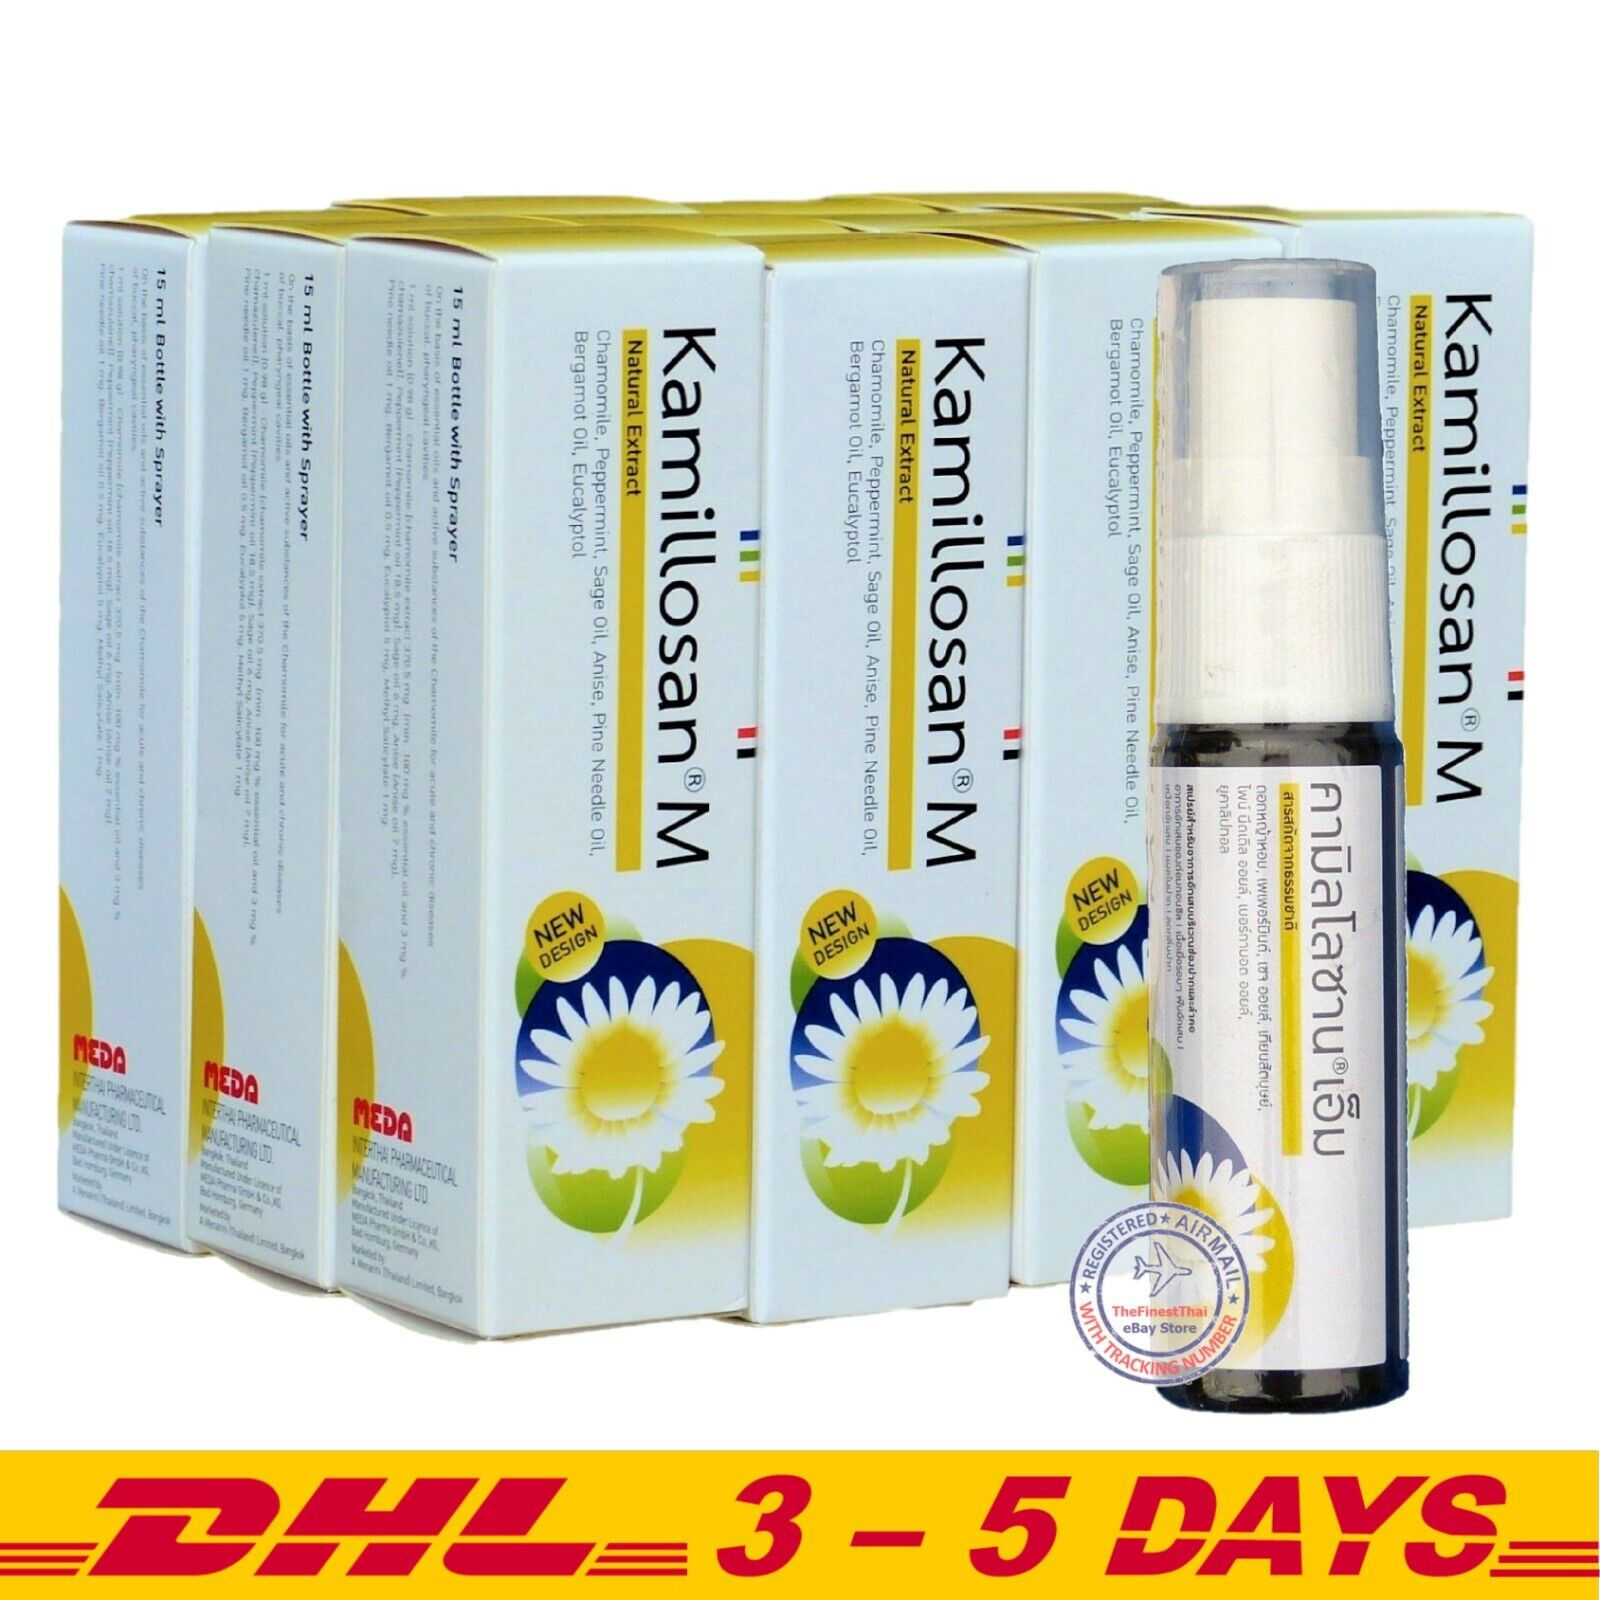 Kamillosan M Mouth Spray for Freshen Breath, Mouth & Oral Care - 15ml x 12